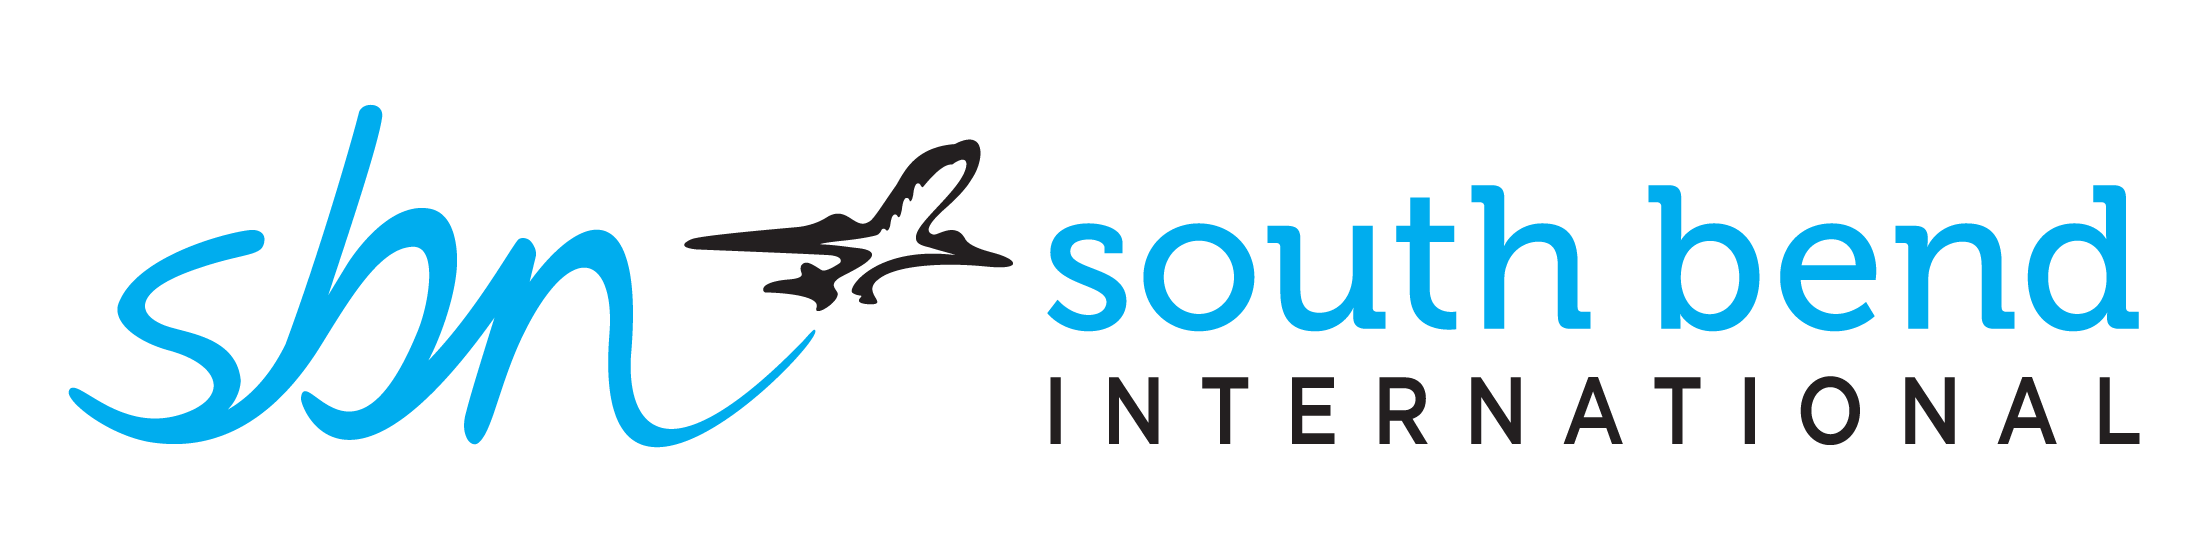 South Bend International airport logo